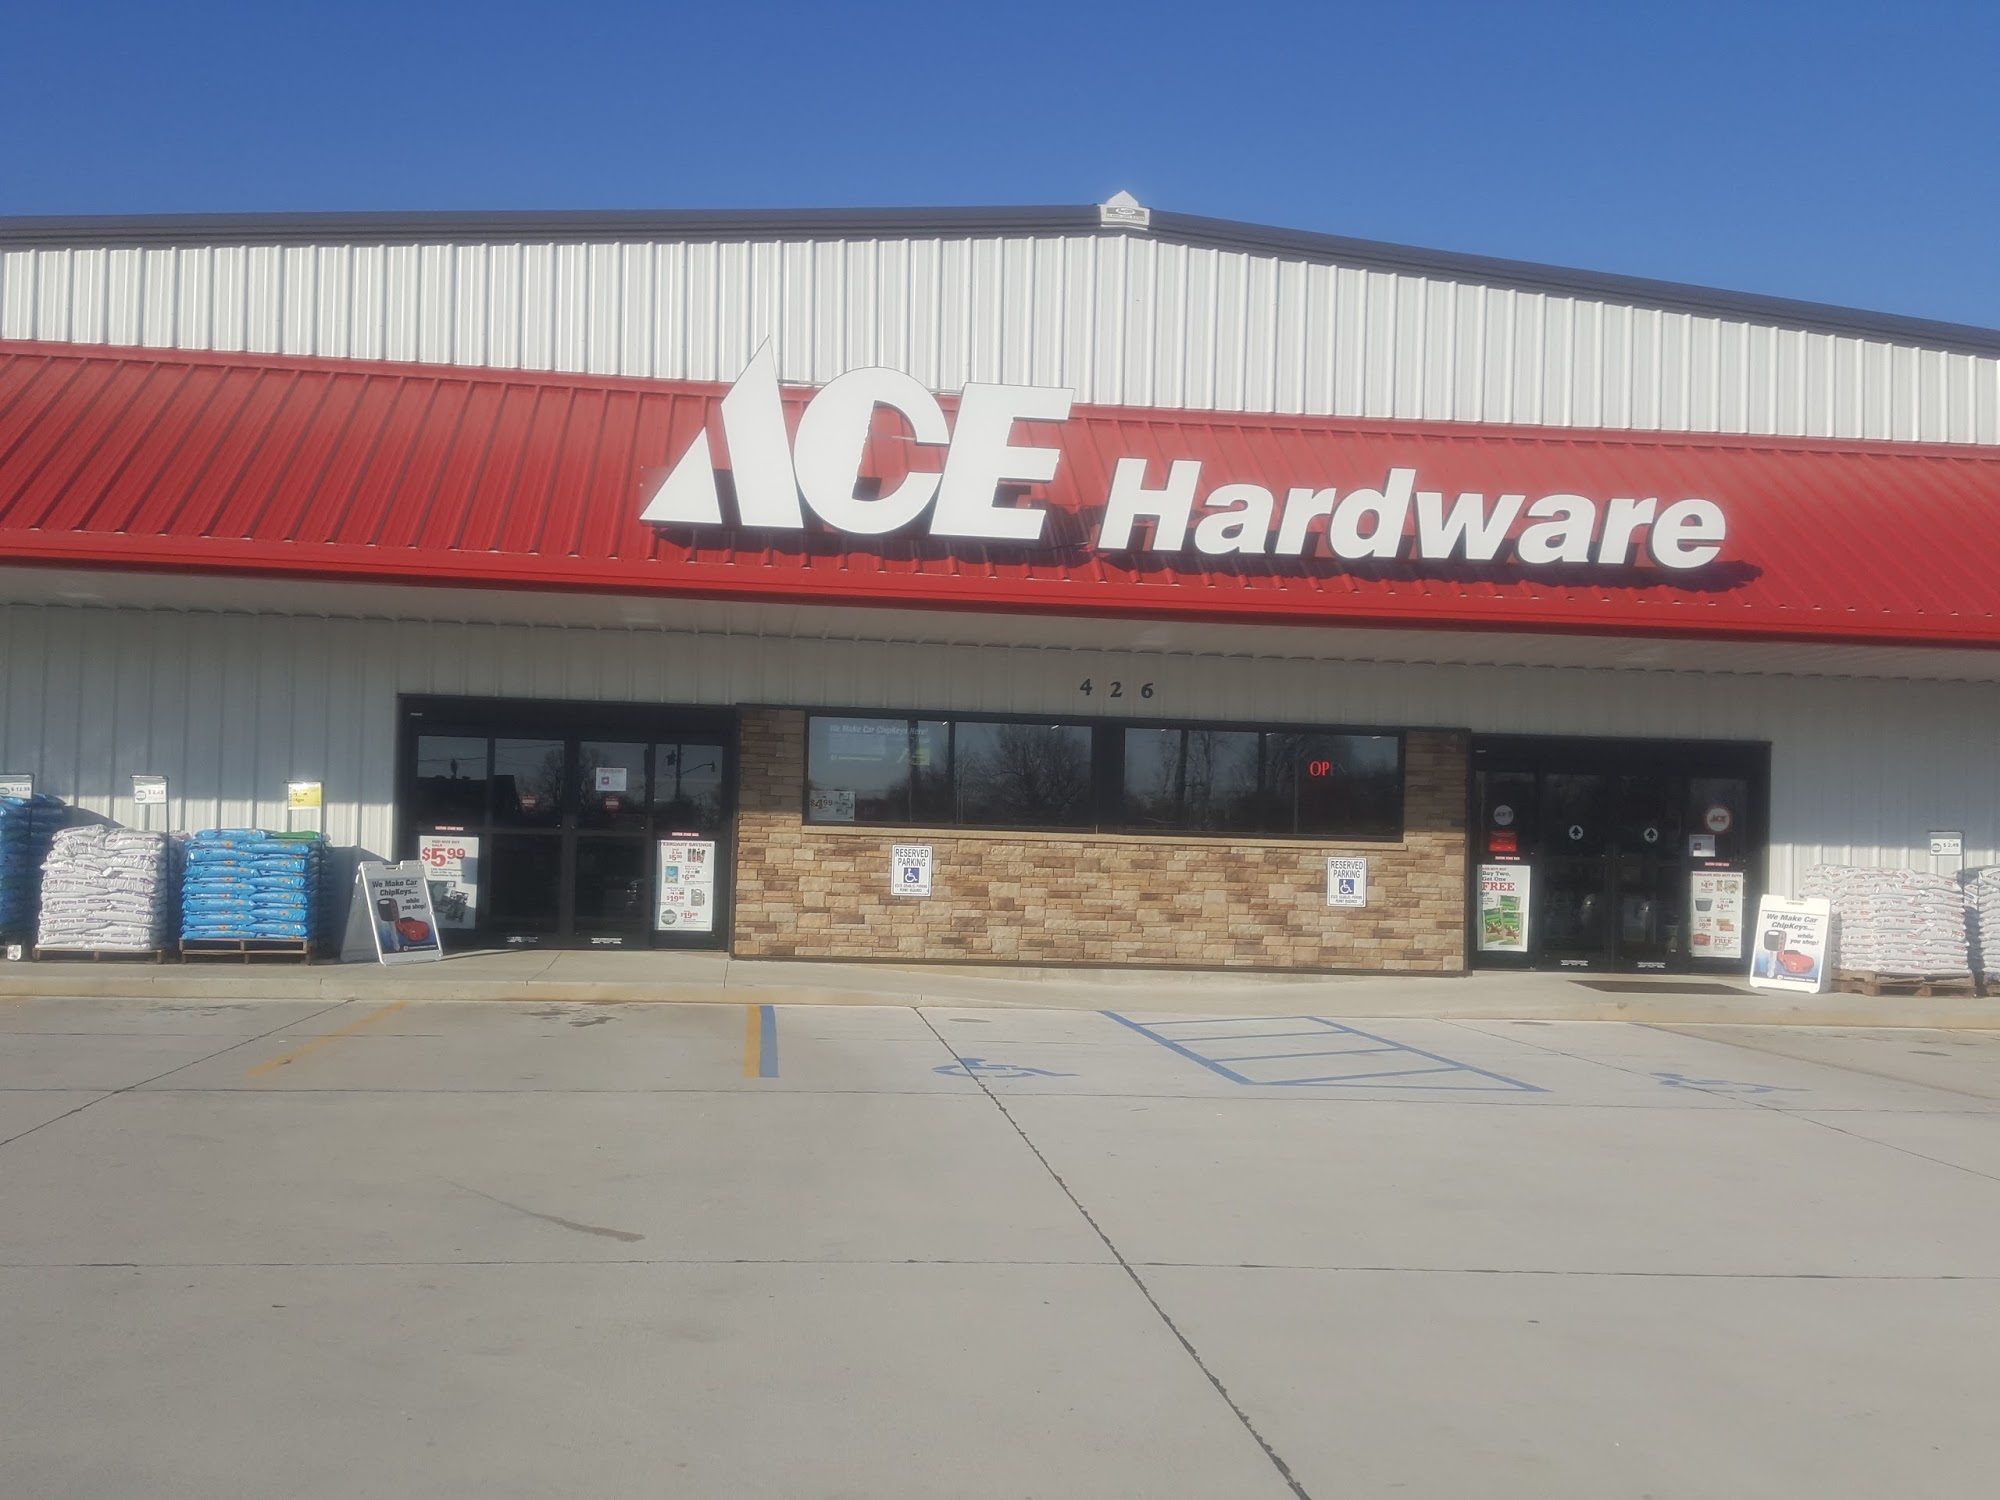 Ken's Ace Hardware